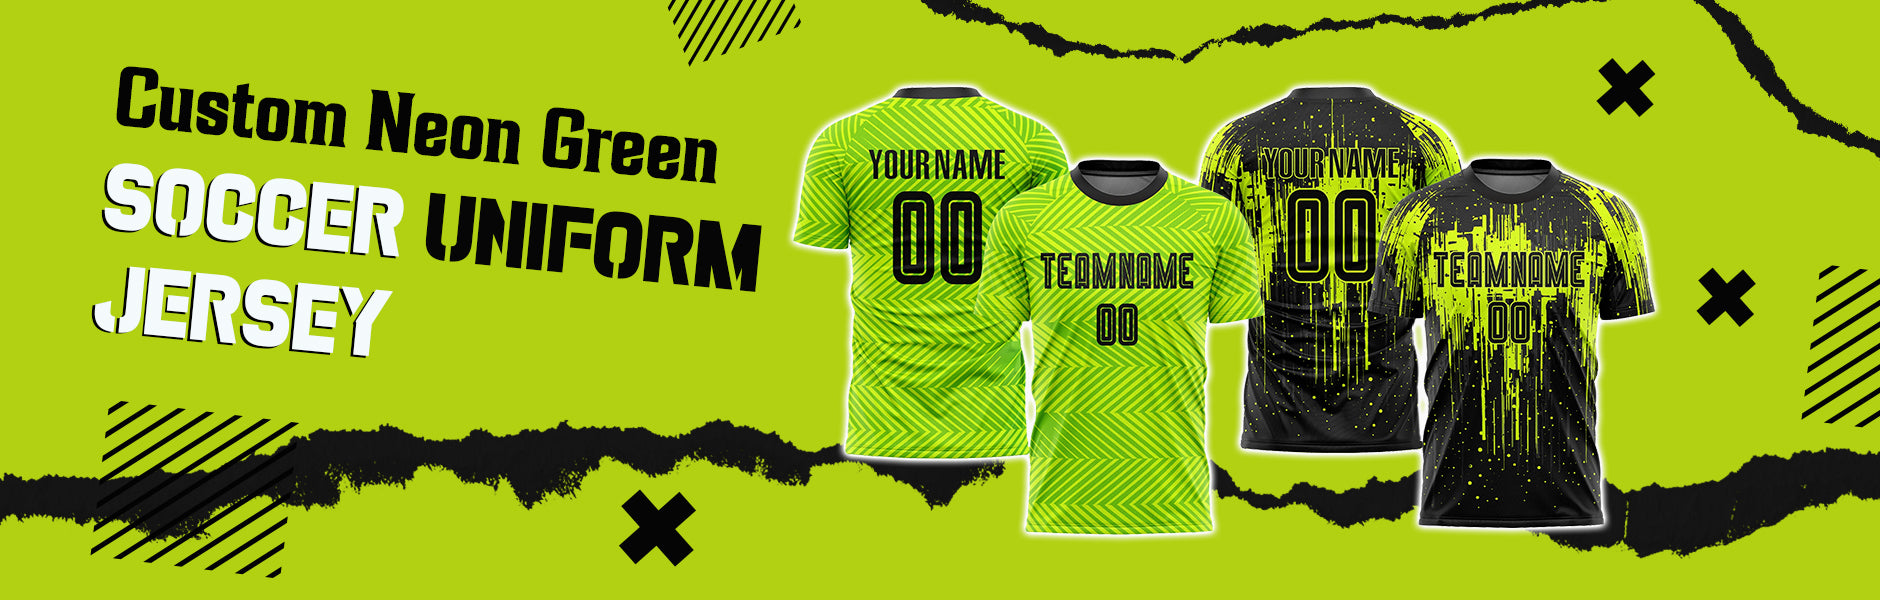 custom soccer neon green jersey